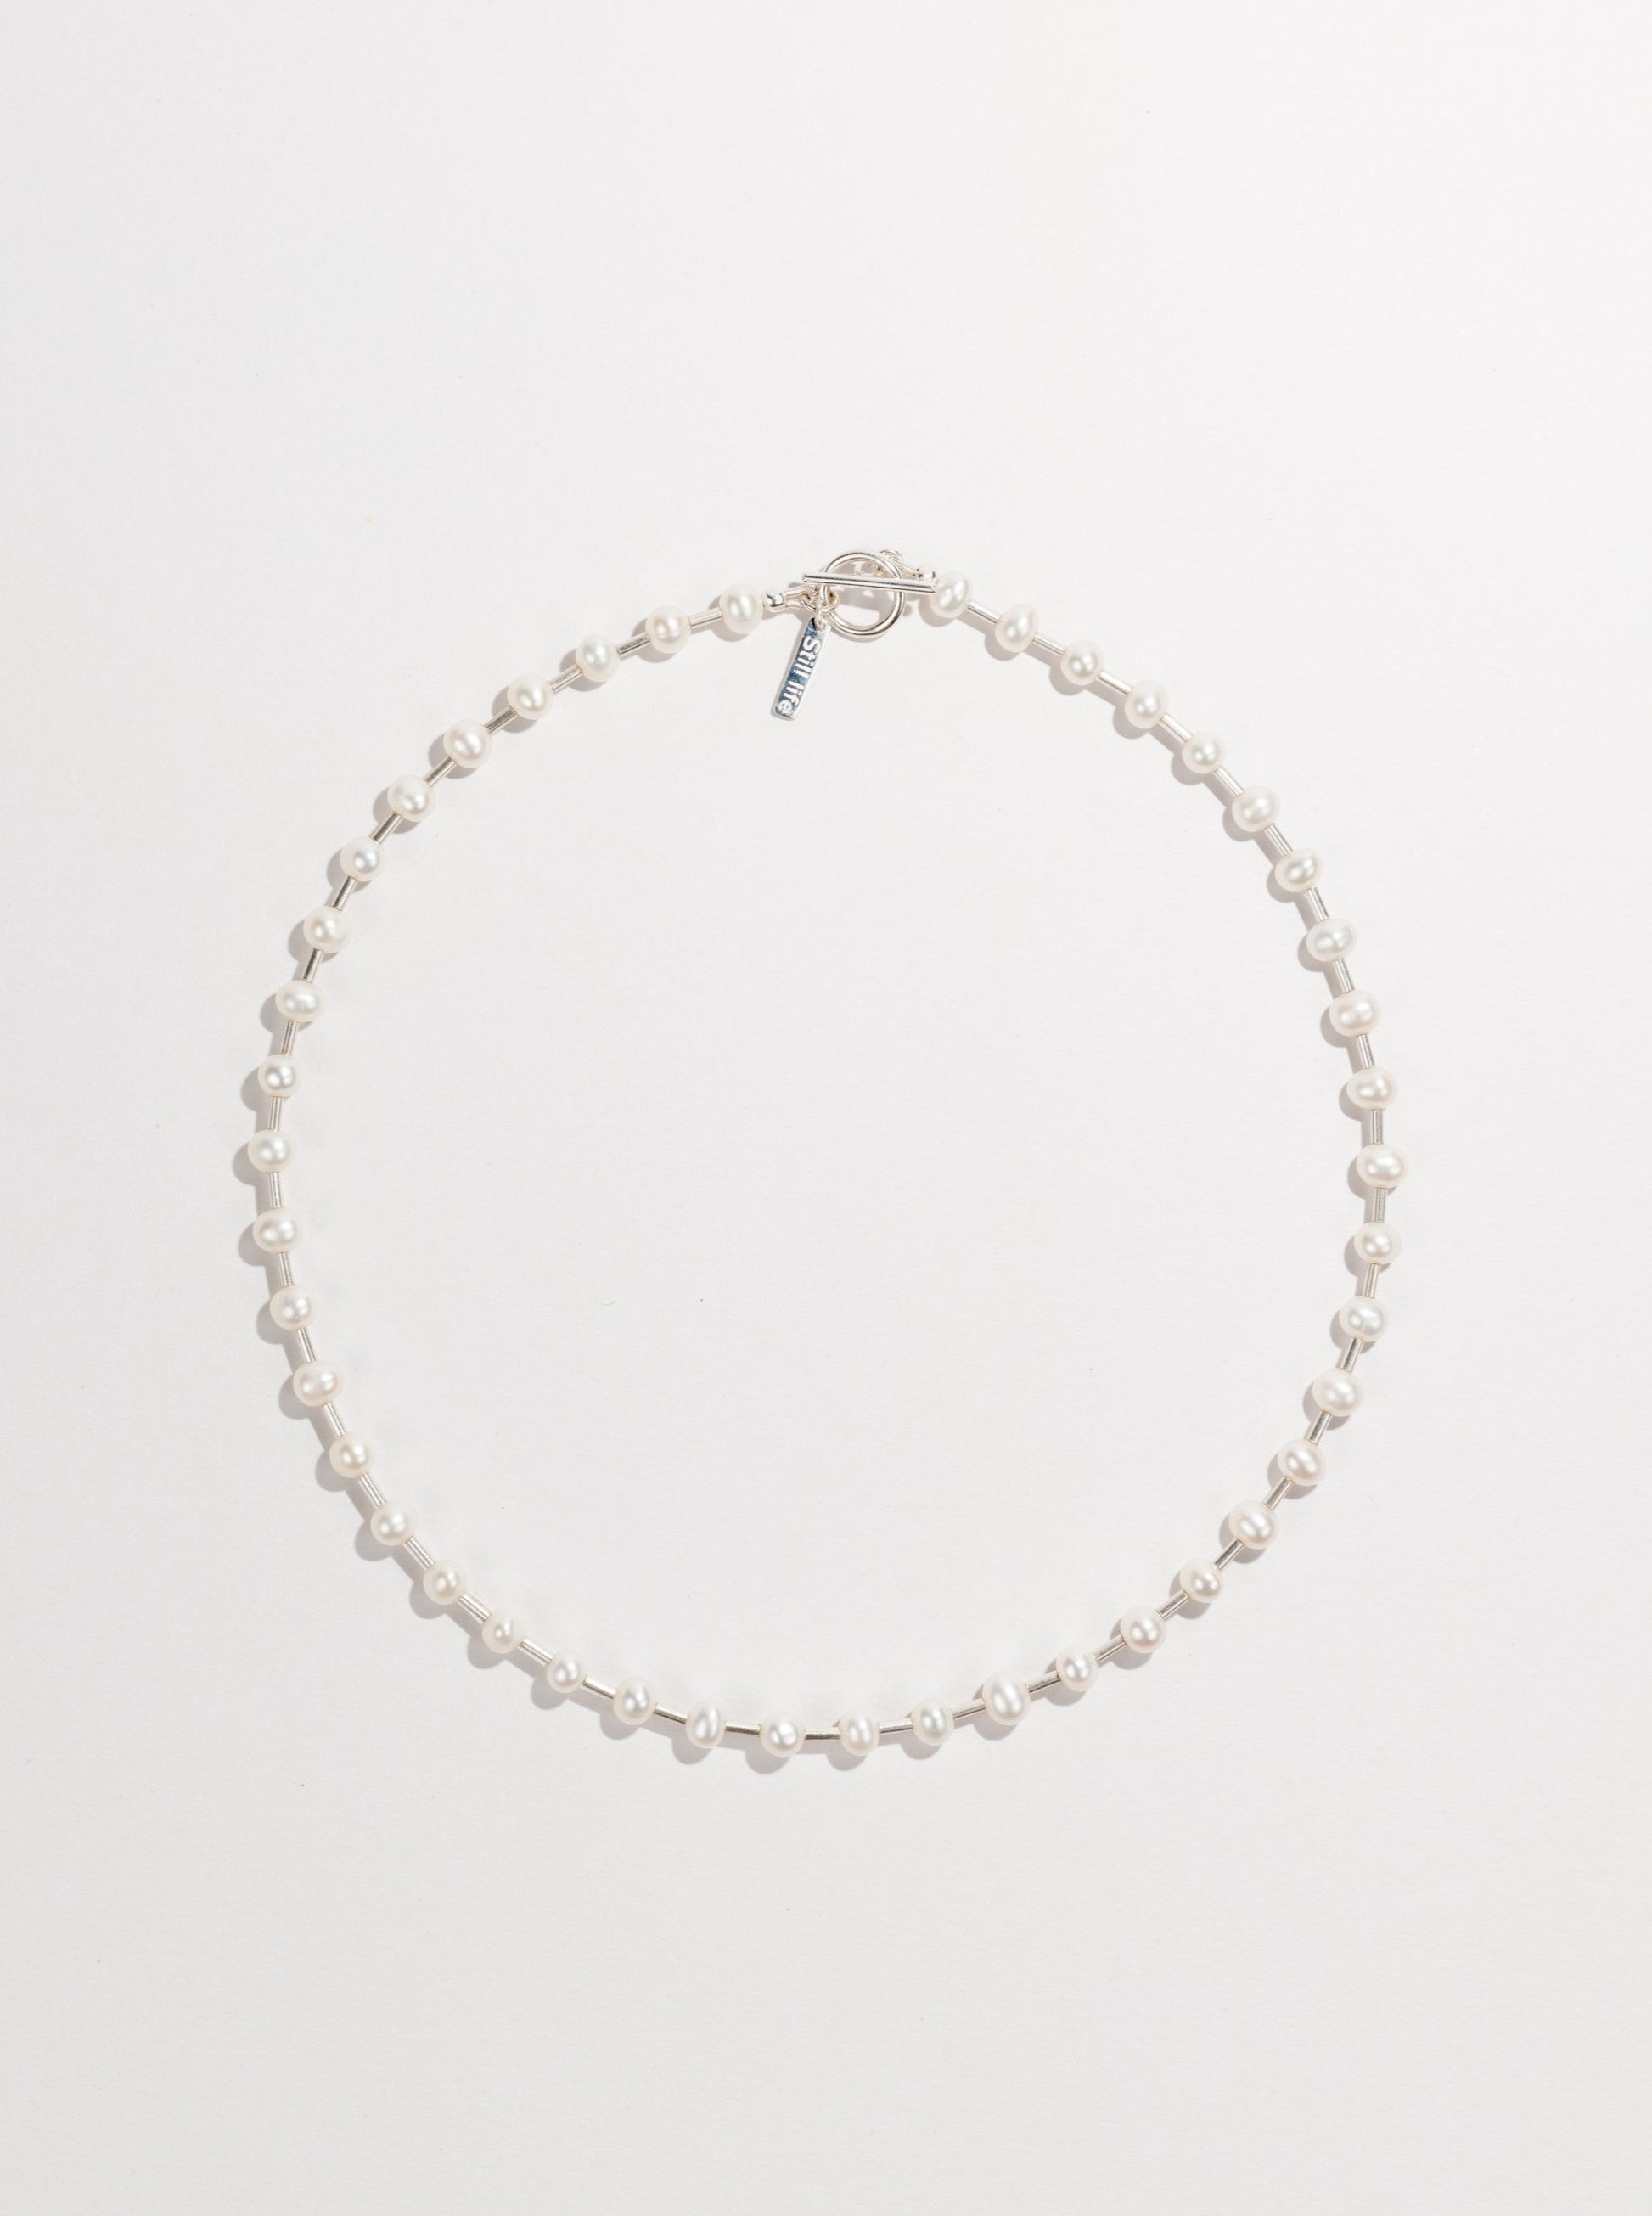 perlovy nahrdelnik se strbrnymi komponentyperlicky pearl necklace